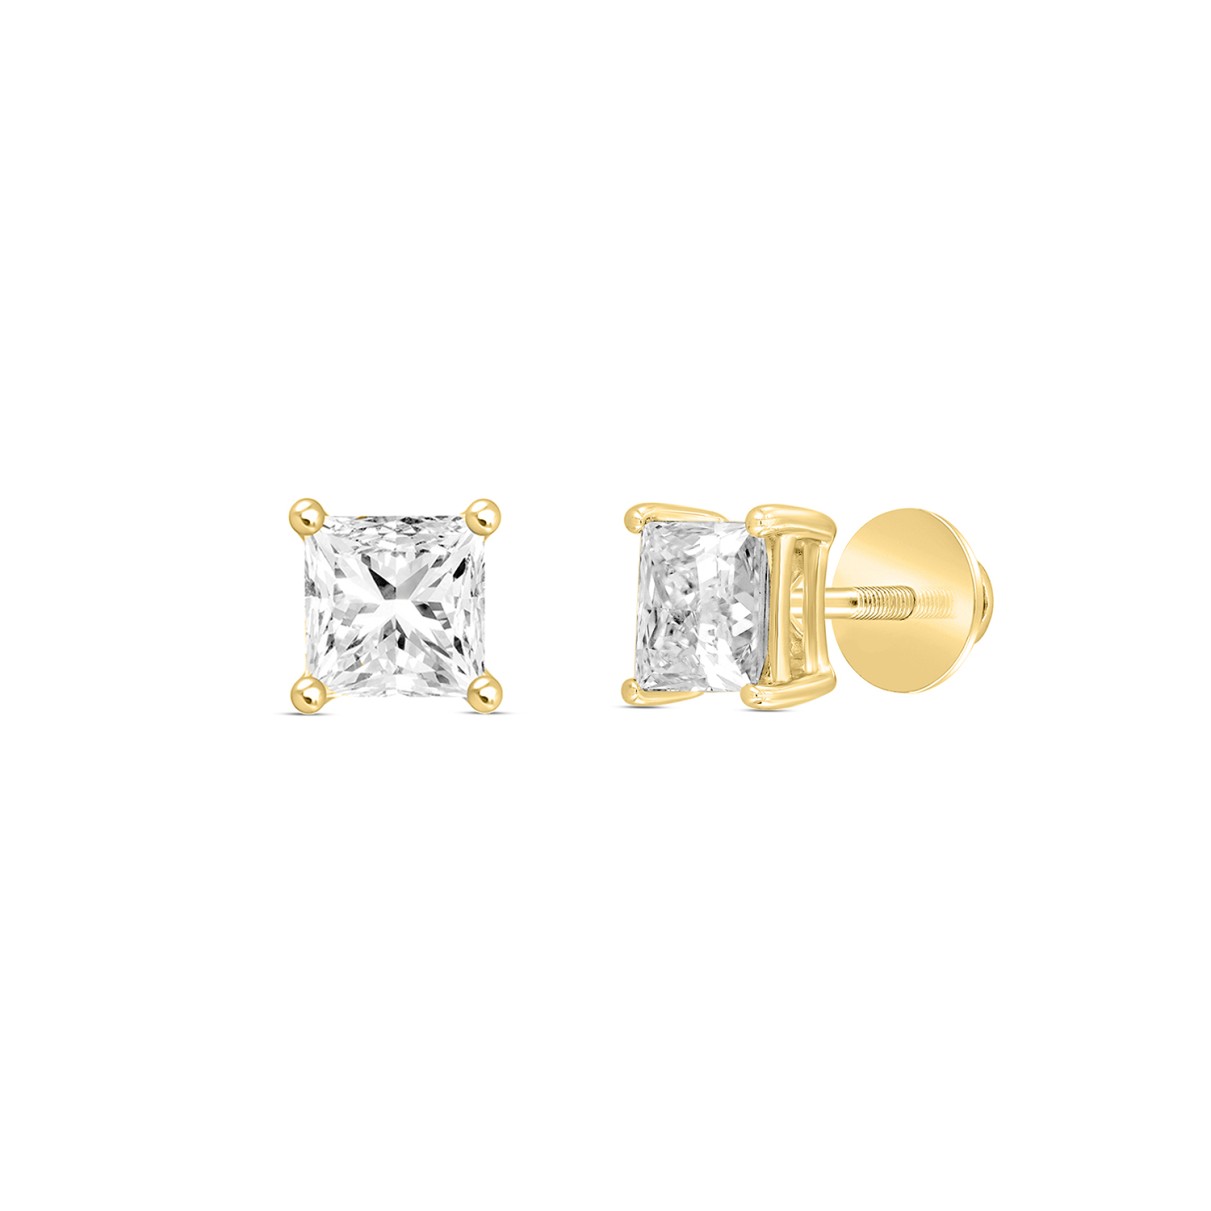 LADIES SOLITAIRE EARRINGS 1 1/2CT PRINCESS DIAMOND 14K YELLOW GOLD